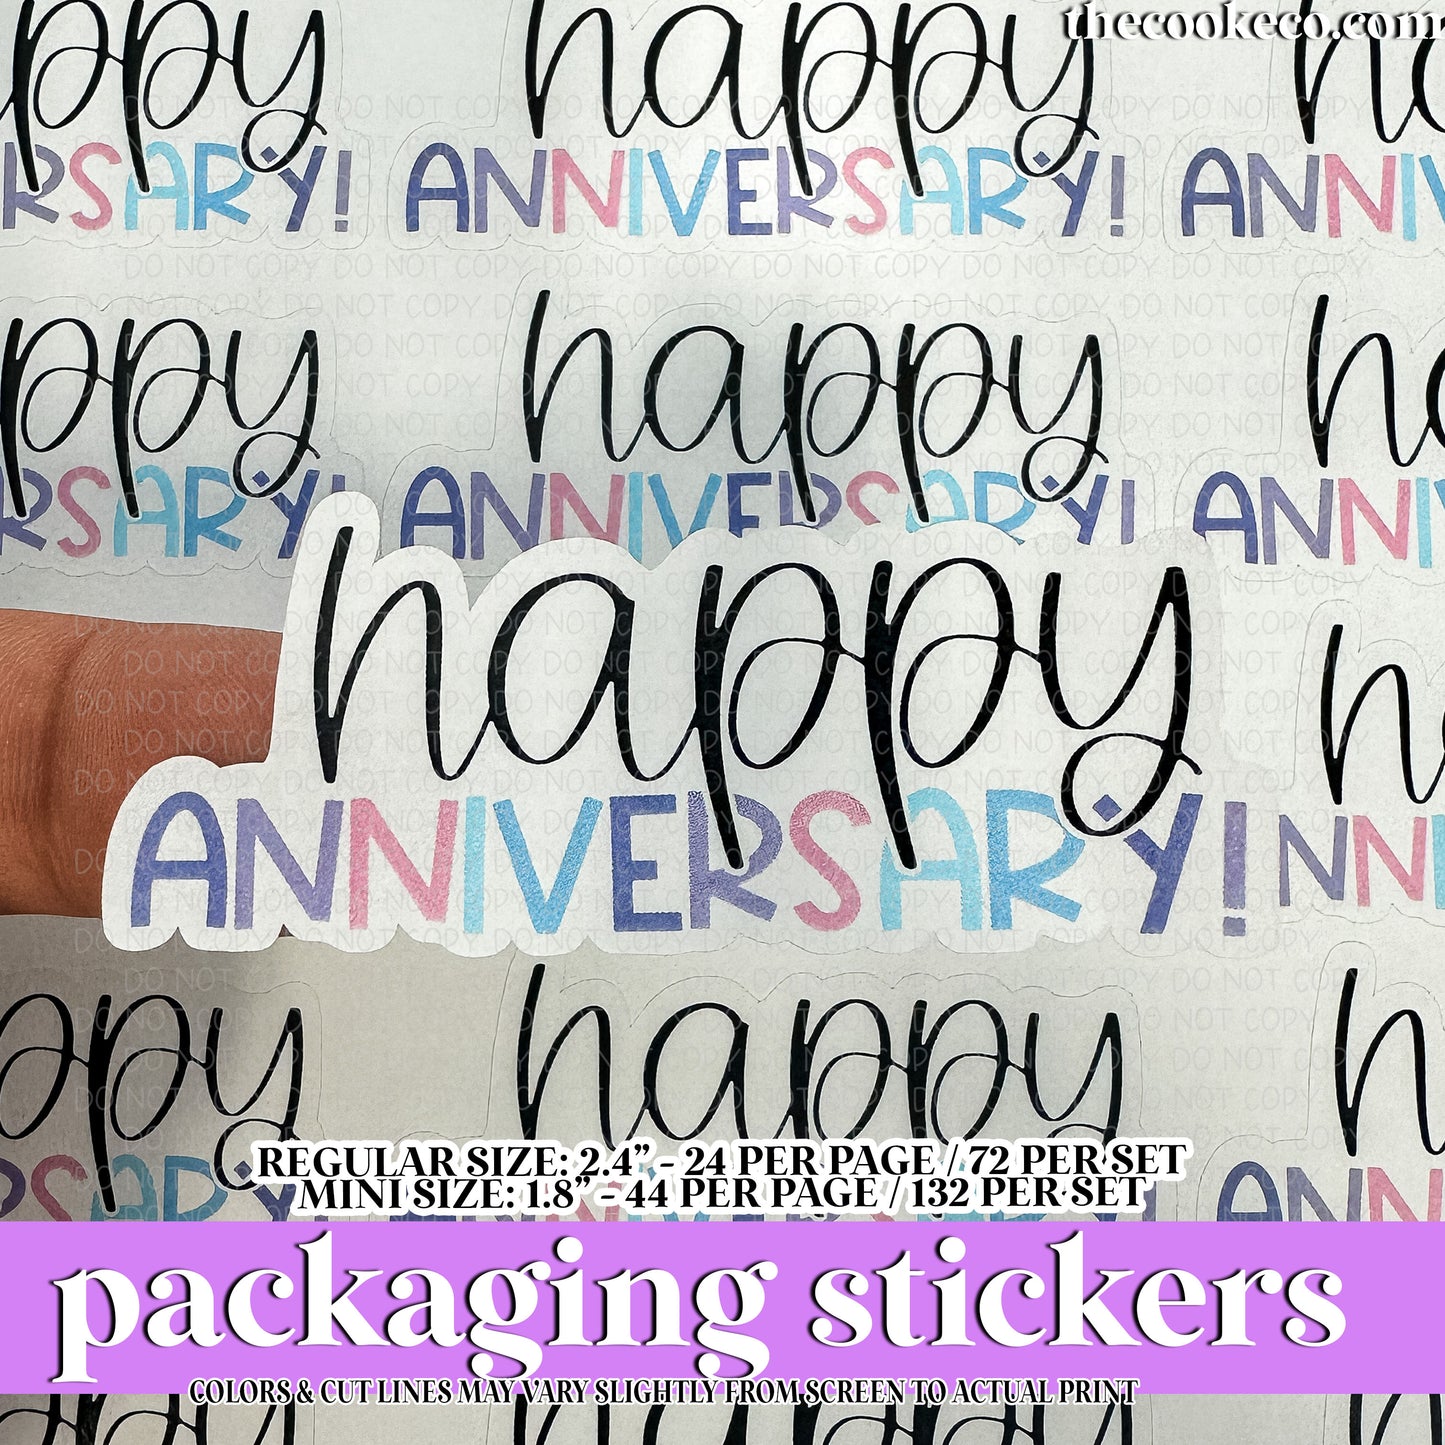 Packaging Stickers | #C0967 - HAPPY ANNIVERSARY PINKS/PURPLES